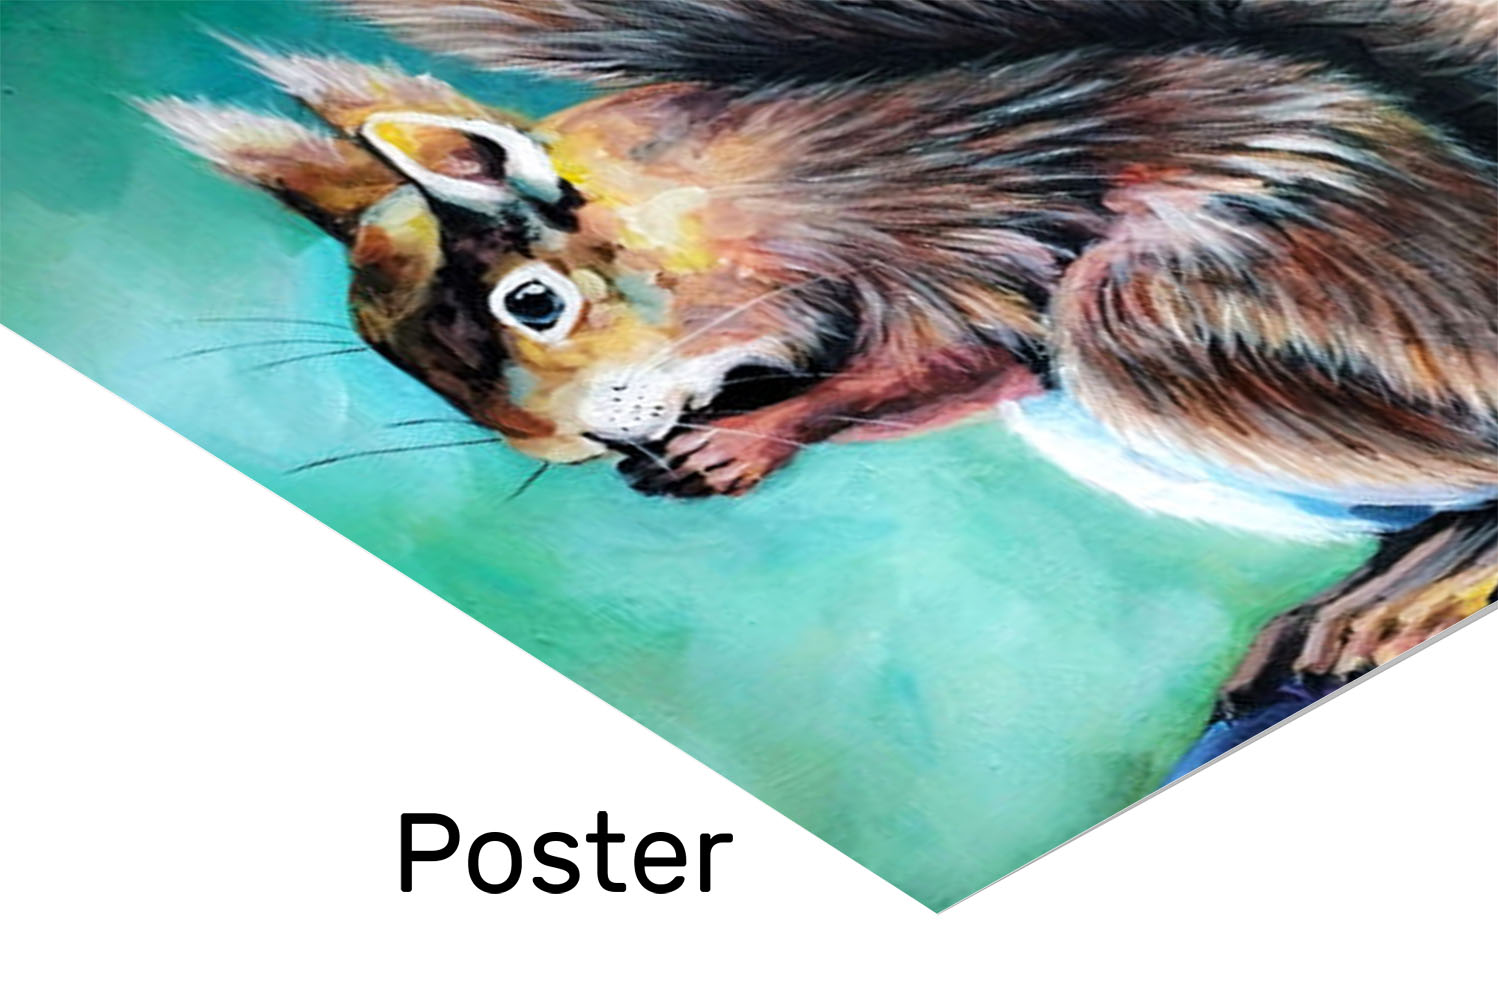 Eichhörnchen Malerei Wandbild – ArtIsGreat